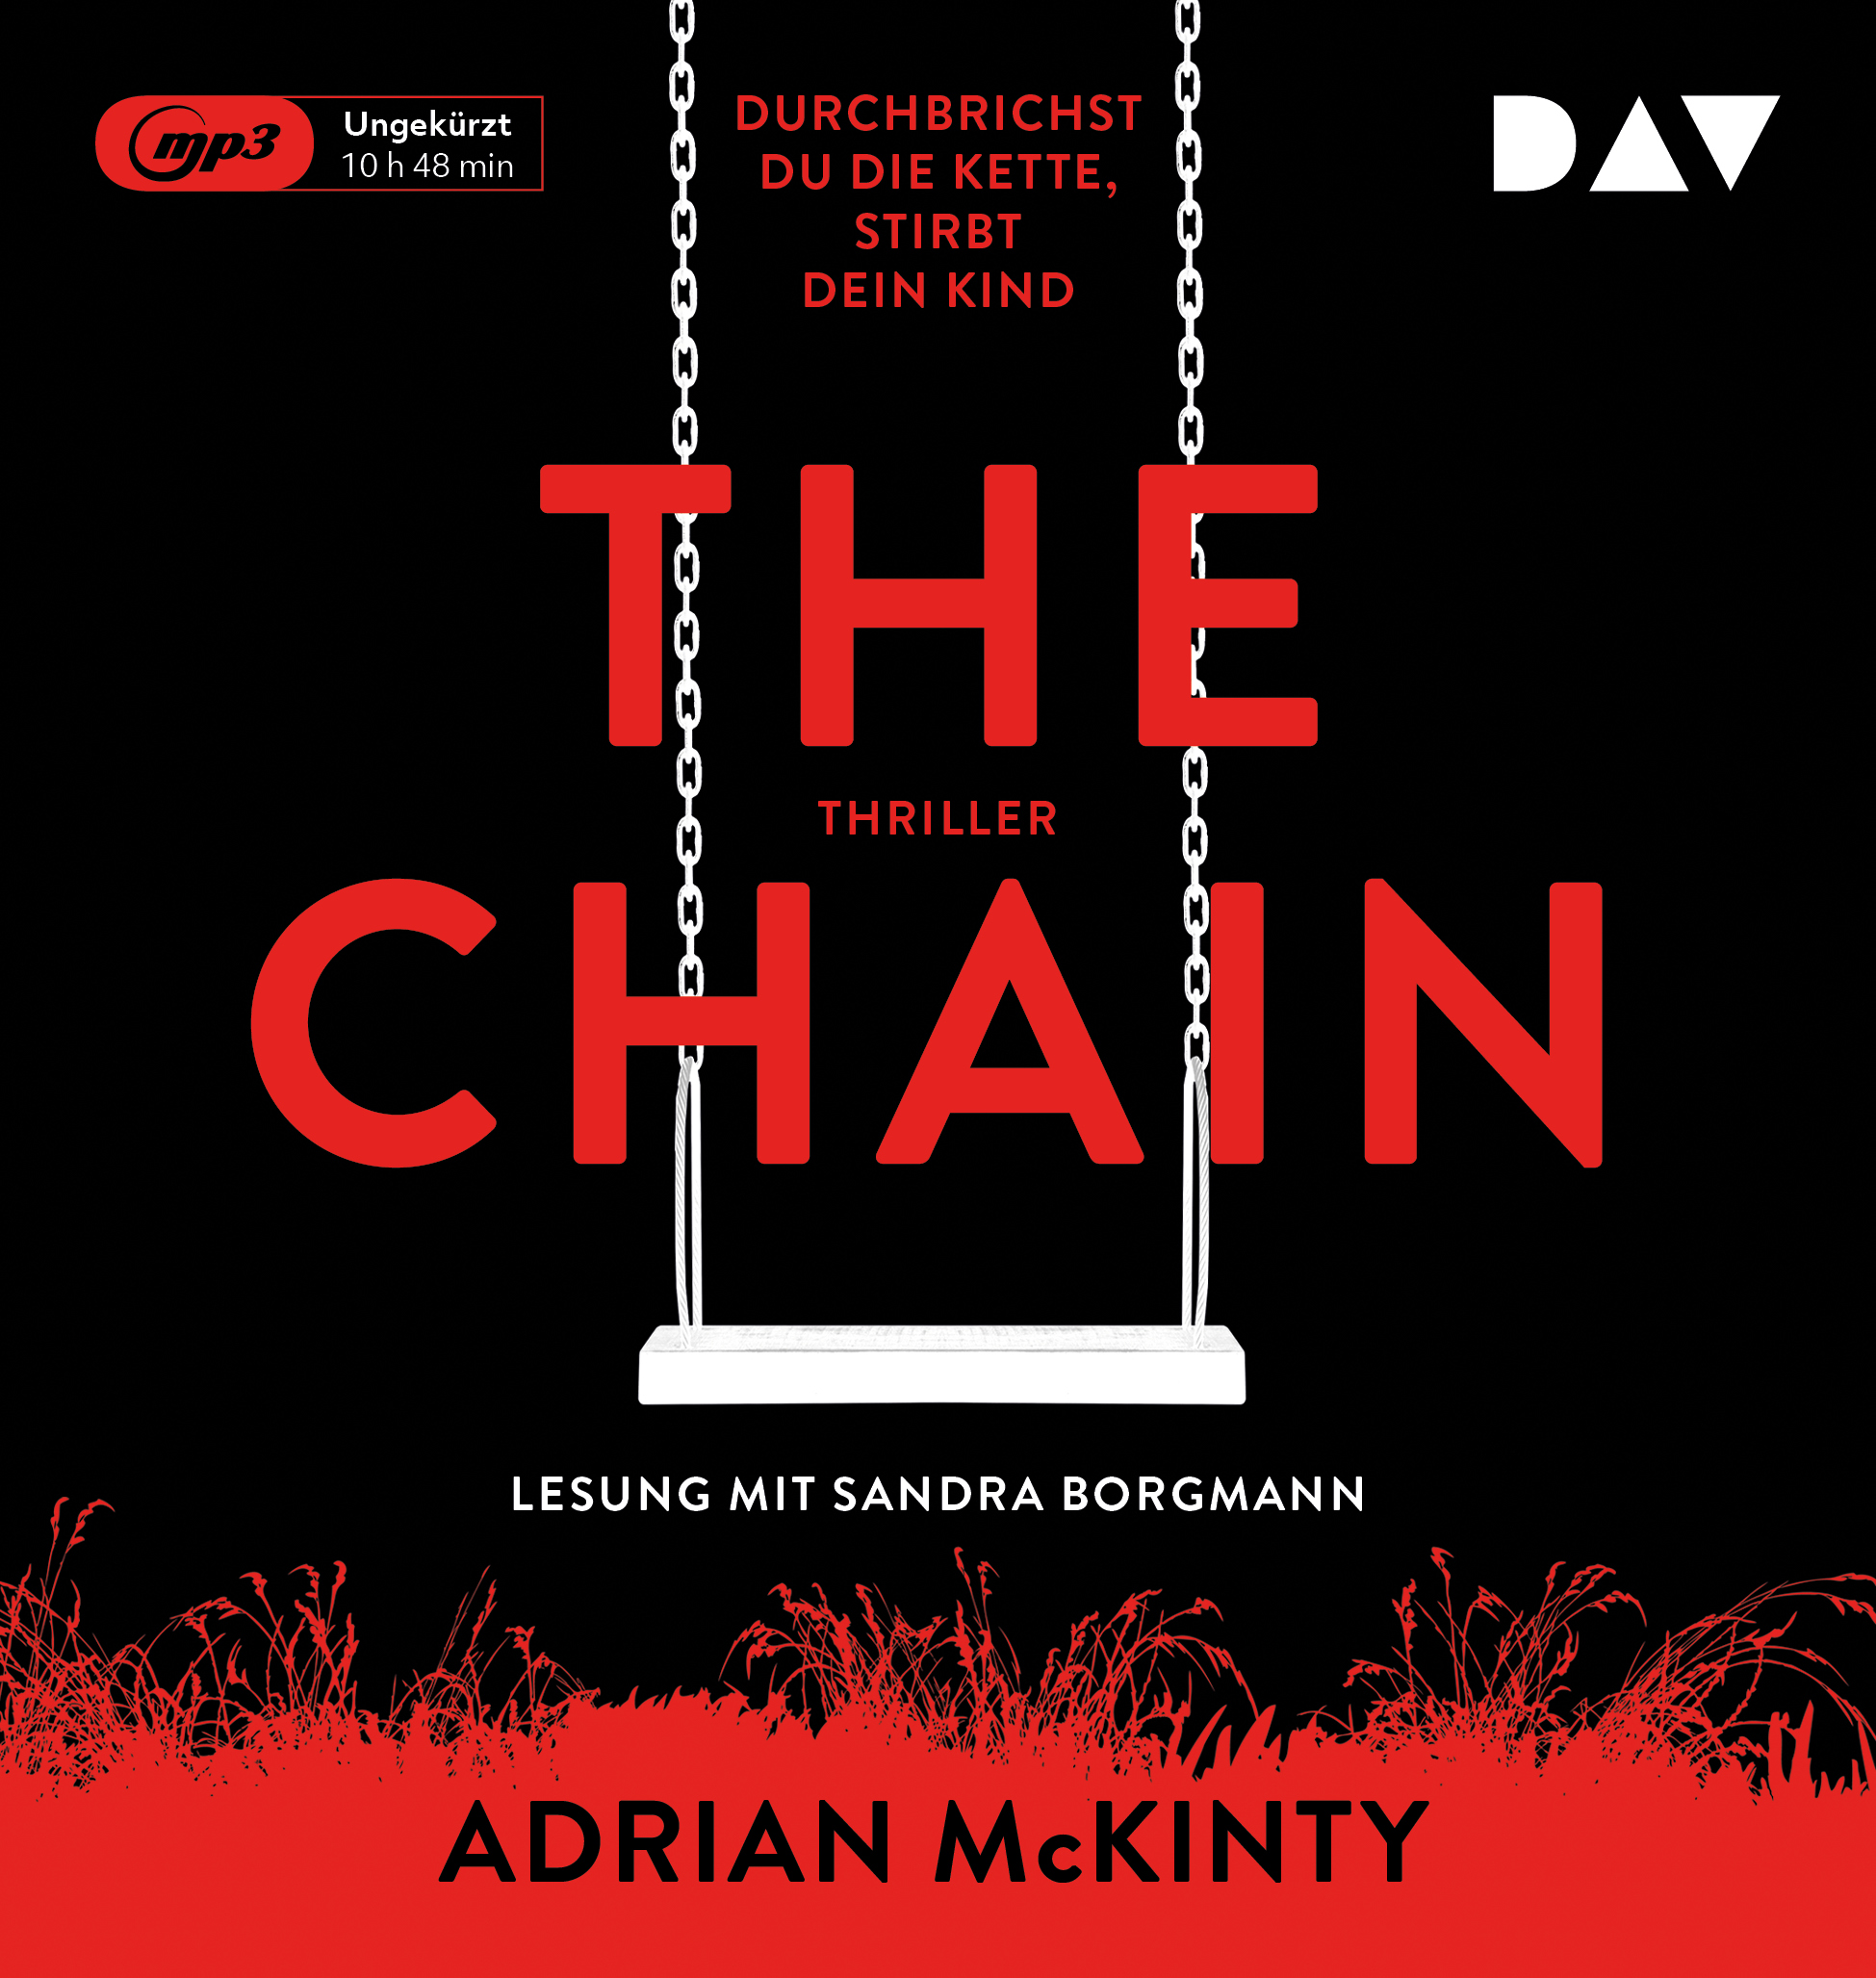 Adrian MCKINTY - the Chain. Обложка the Chain арт. Chain перевод. The critical Chain method. Dein kind